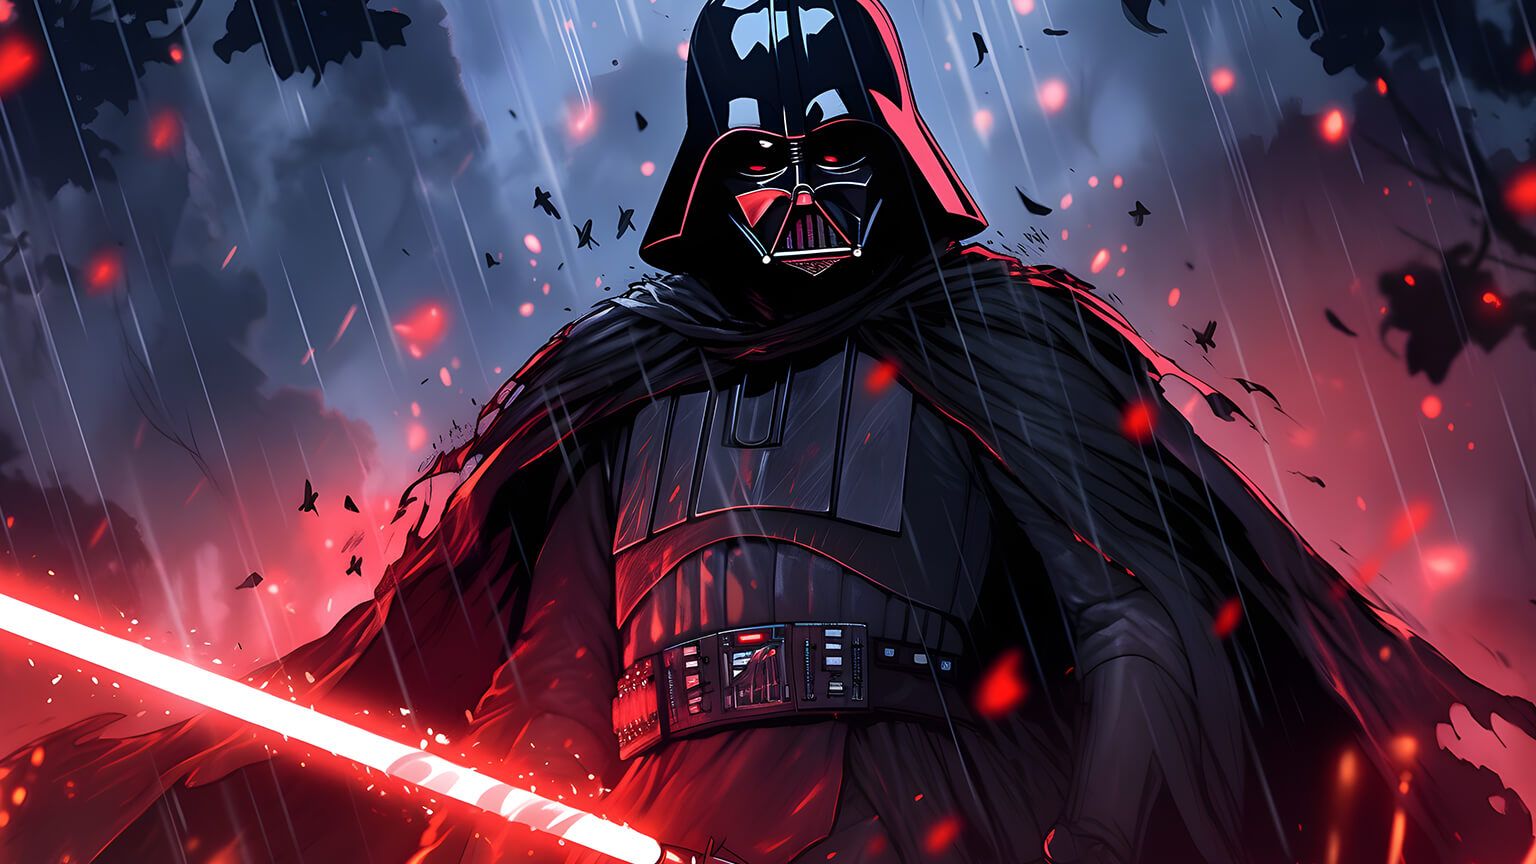 Star Wars Darth Vader in the Rain